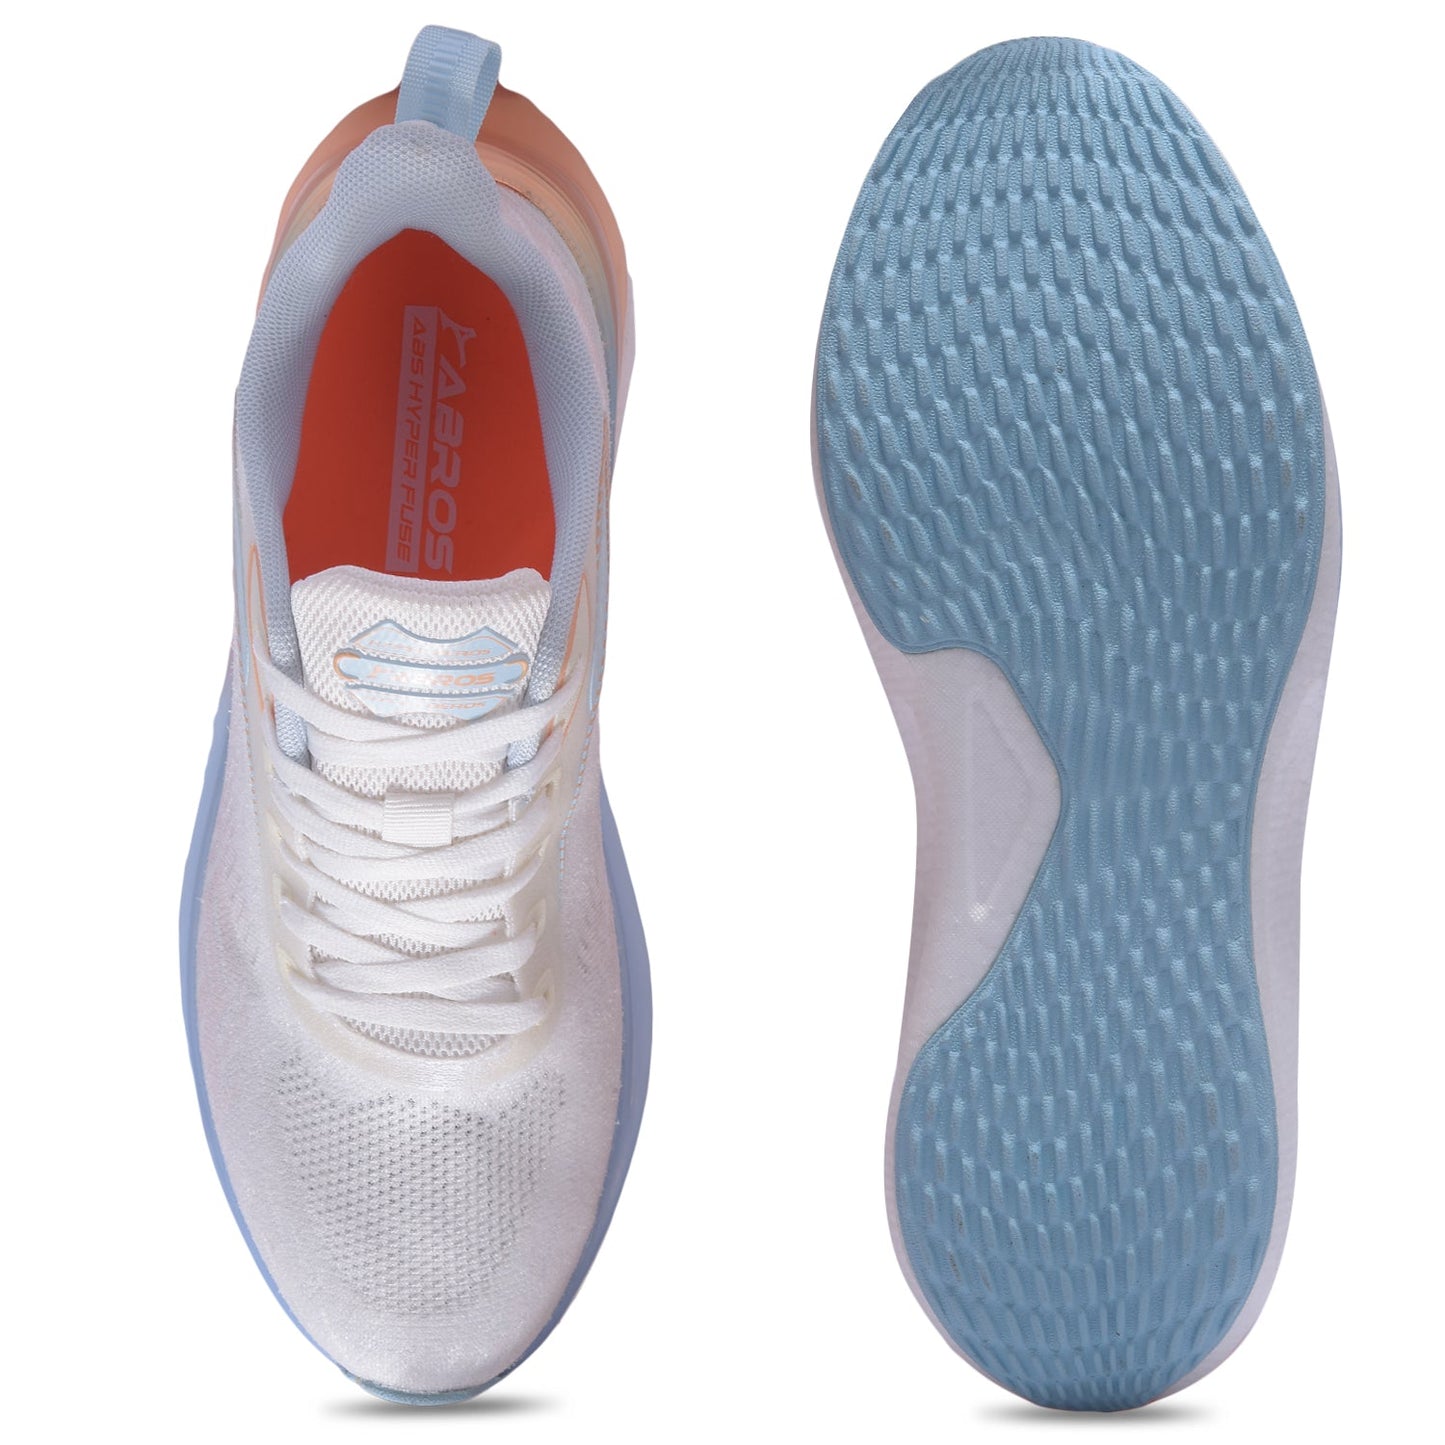 Abros Future ASSG1368 WHITE/SEA MIST Mens Sports Shoes